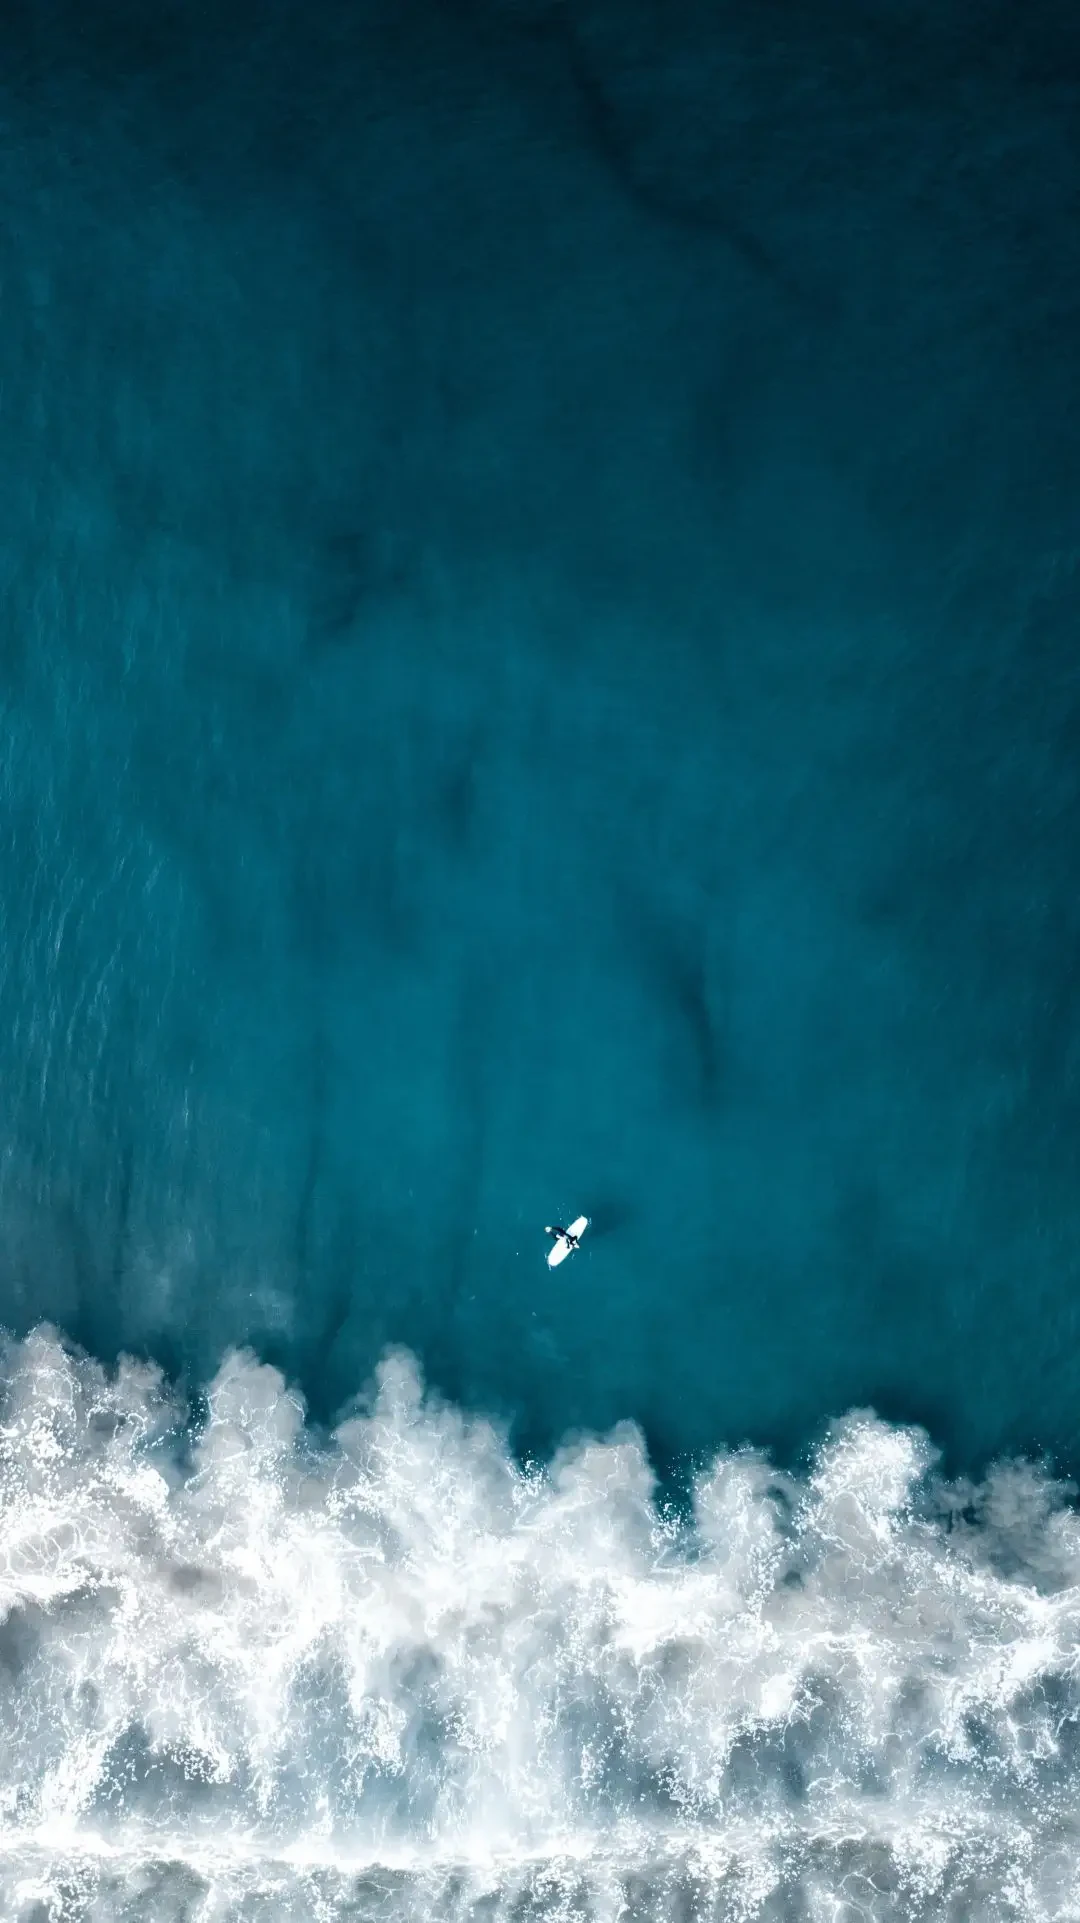  Ozean Hintergrundbild 1080x1923. Aesthetic Ocean Wallpaper For iPhone (Free Download!)